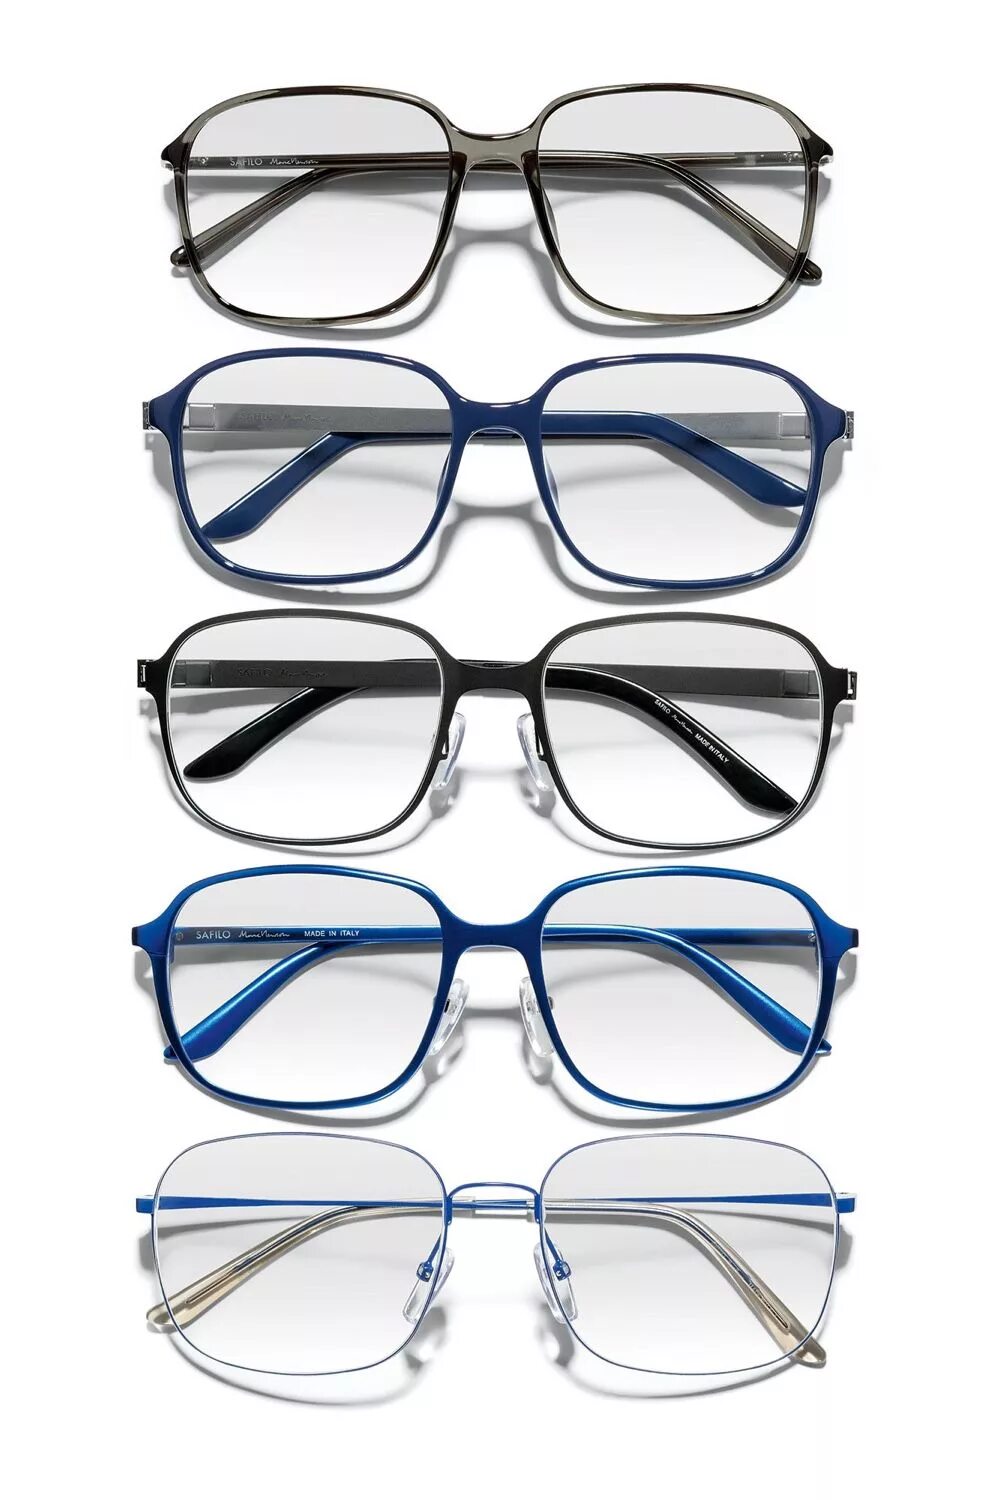 Сафило очки. Солнцезащитные очки Safilo. Safilo Group очки бренды. Tropical bi Safilo мужские очки. Очки collection